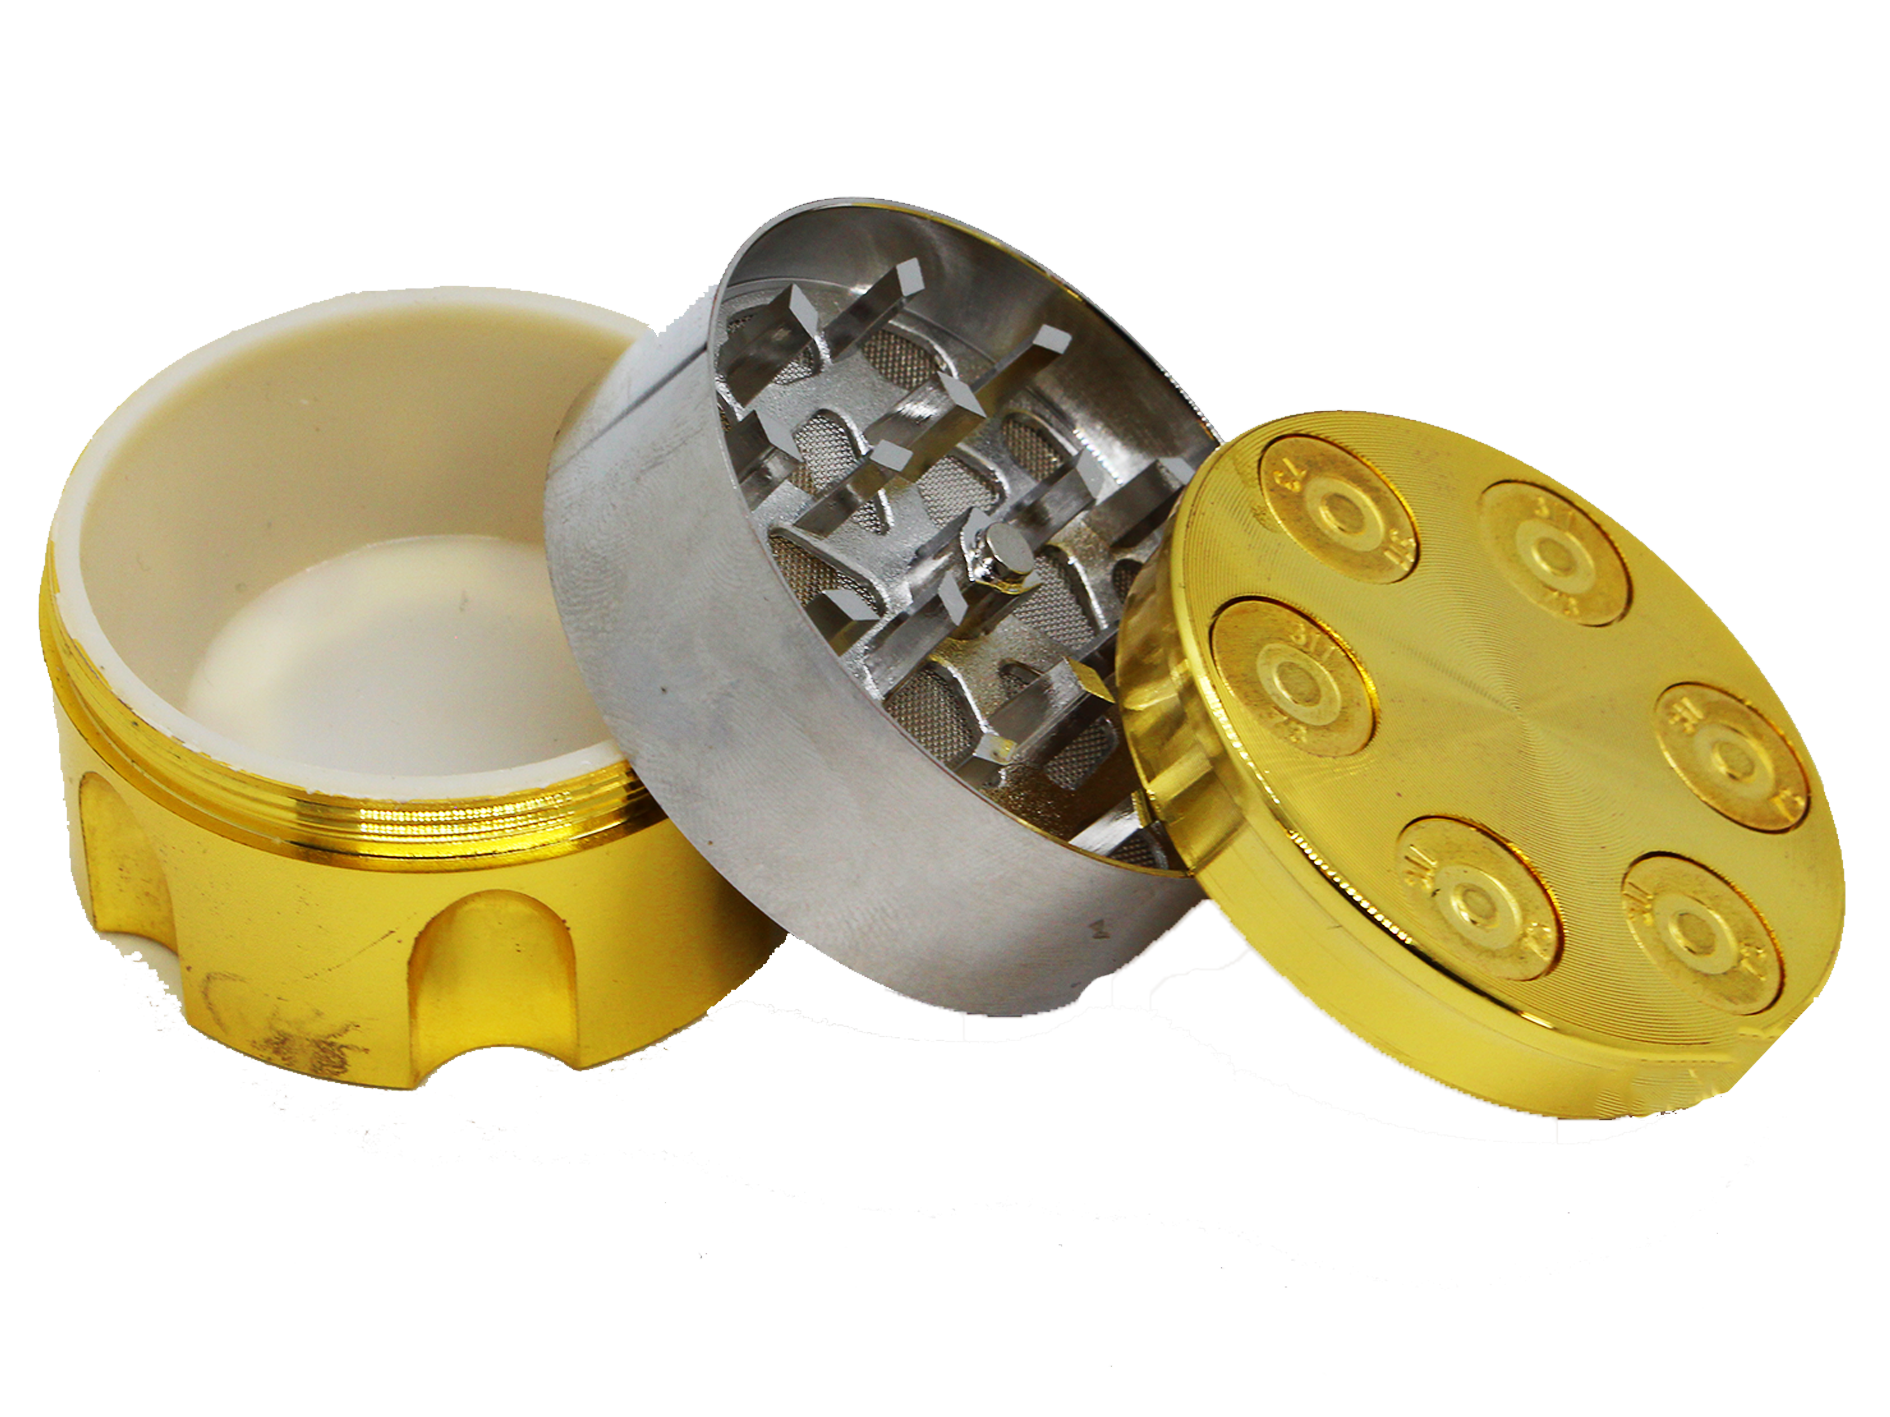 GRINDER Metal Bullet Gold HX239G 3 Part - VIR Wholesale